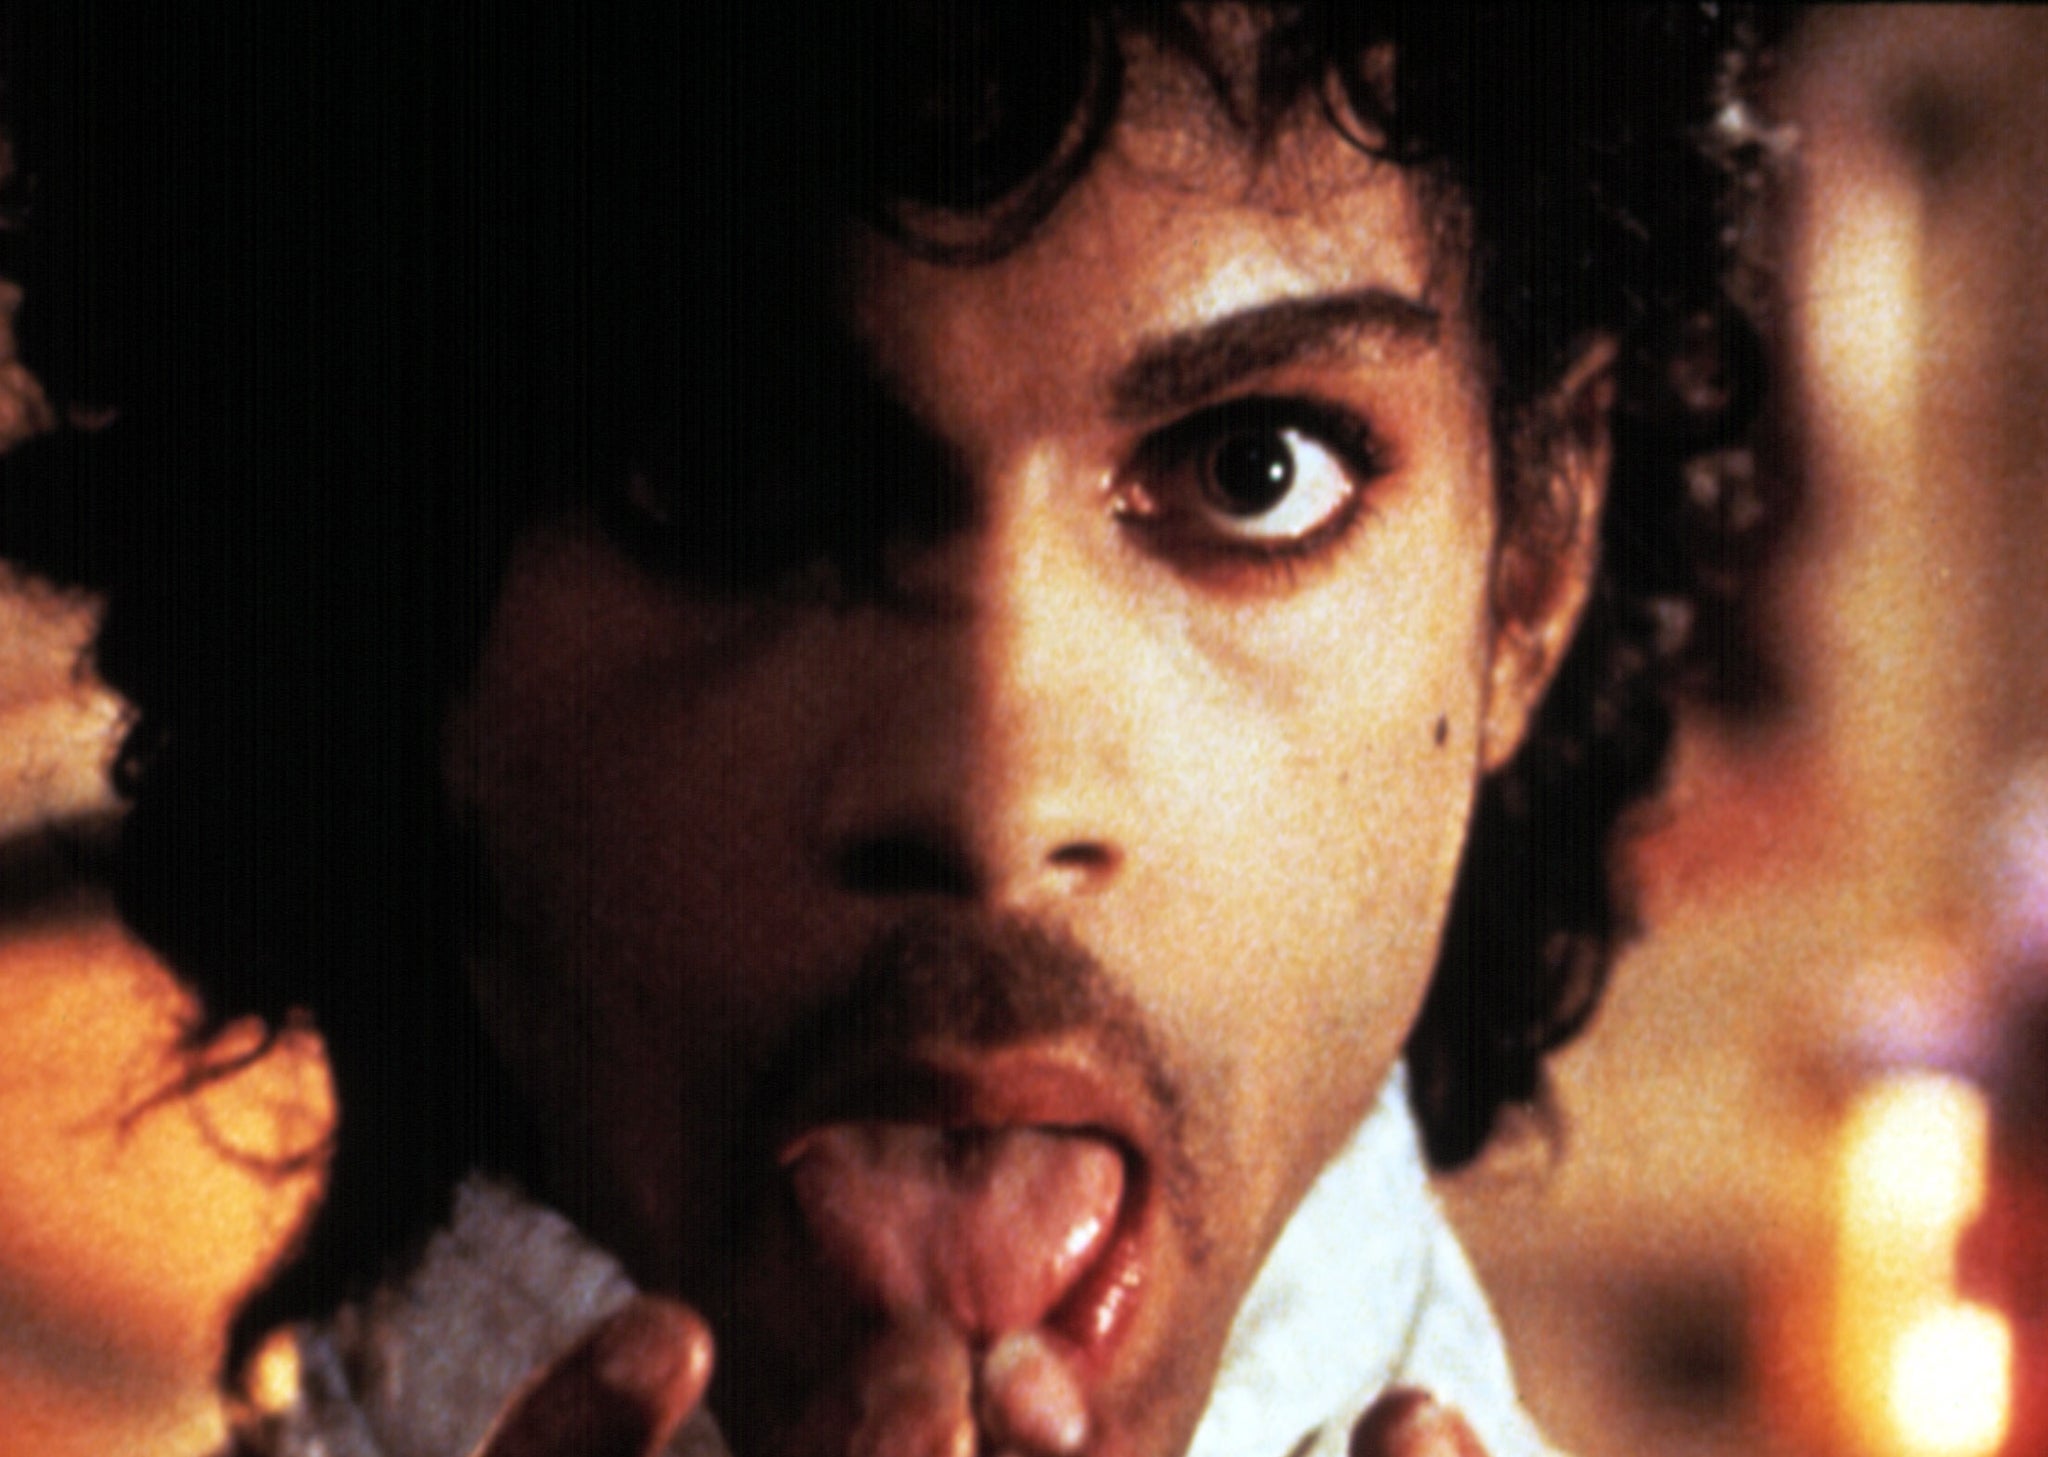 Prince in 1984 film Purple Rain